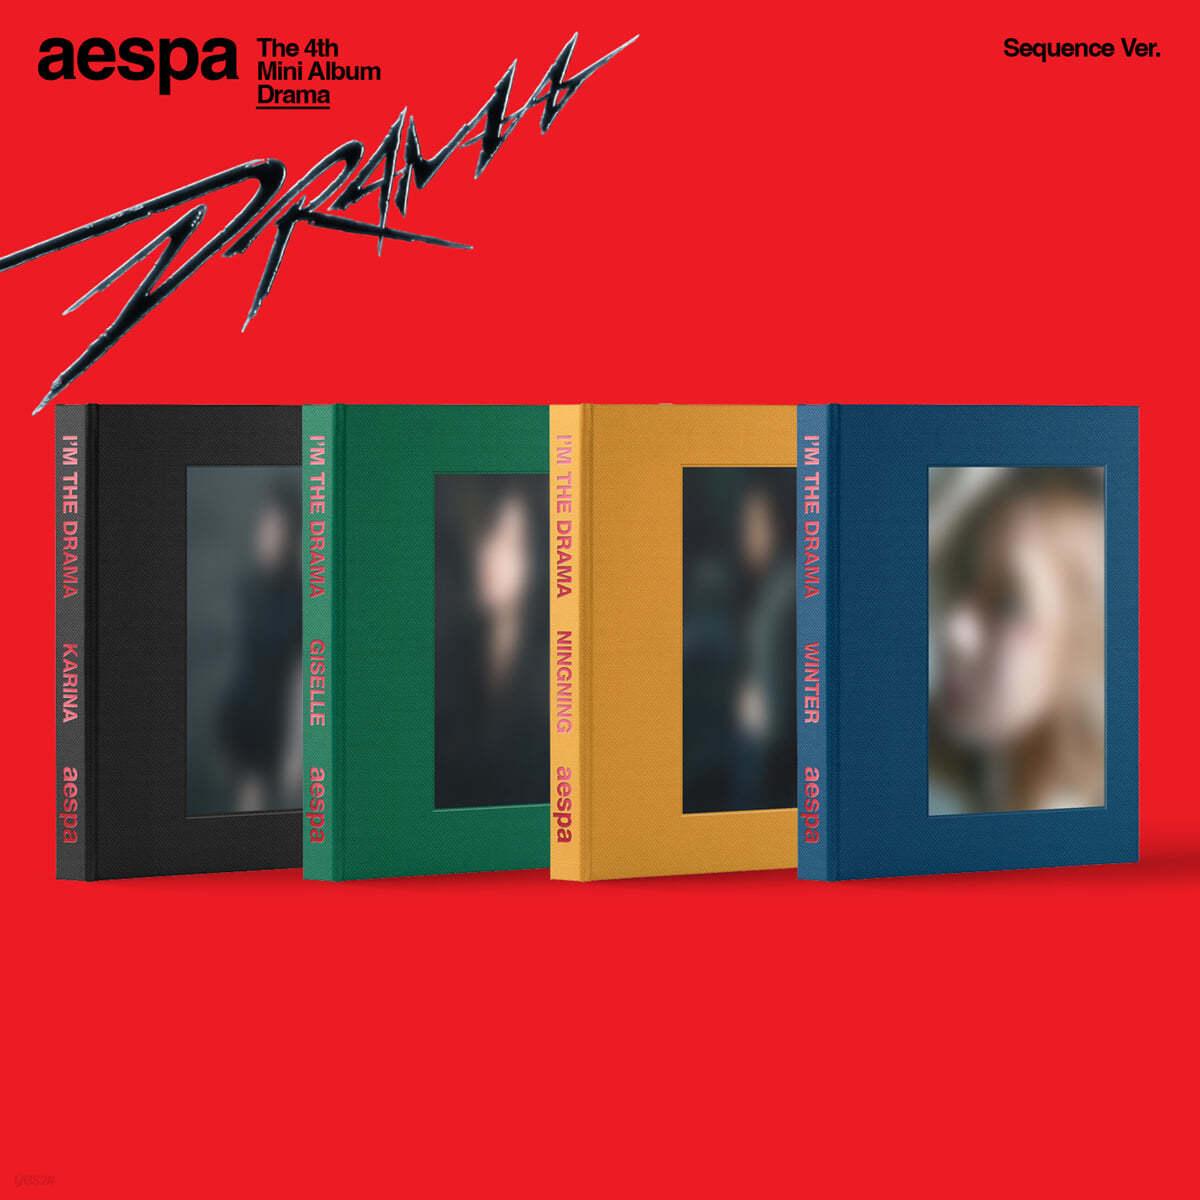 AESPA 4th Mini Album 'Drama' (Sequence Ver.) - KKANG